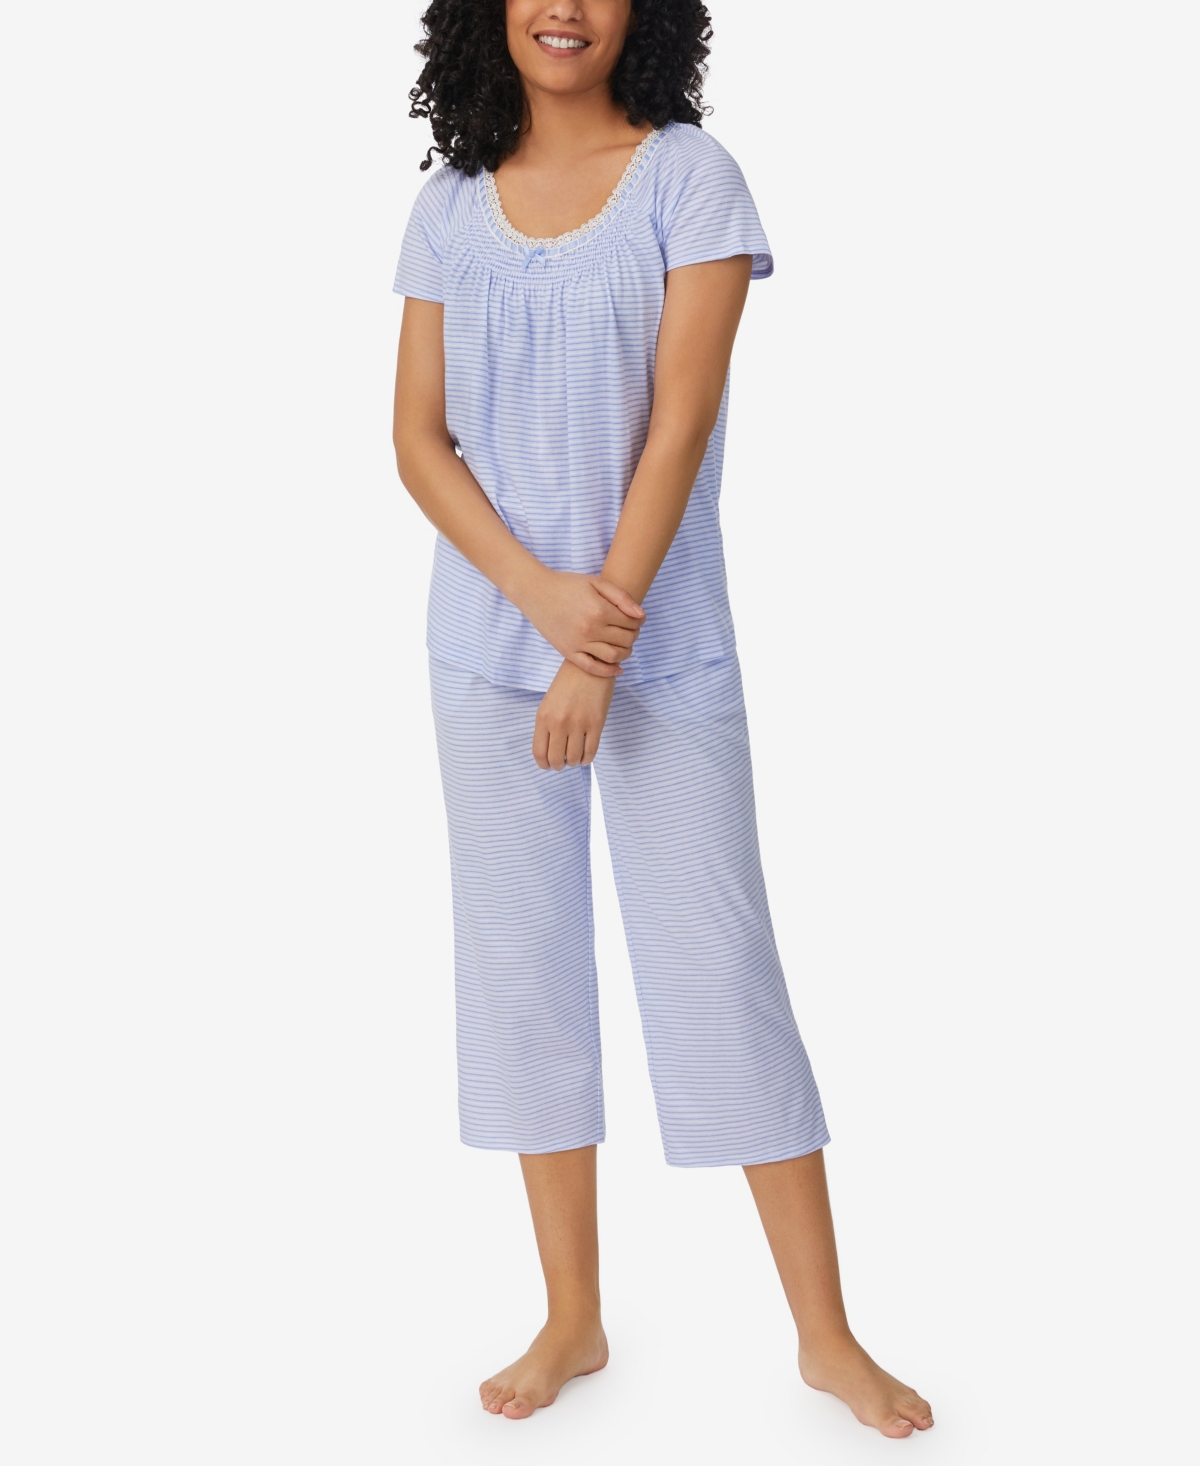 Women's Cap Sleeve Capri 2 Piece Pajama Set - Blue Stripe